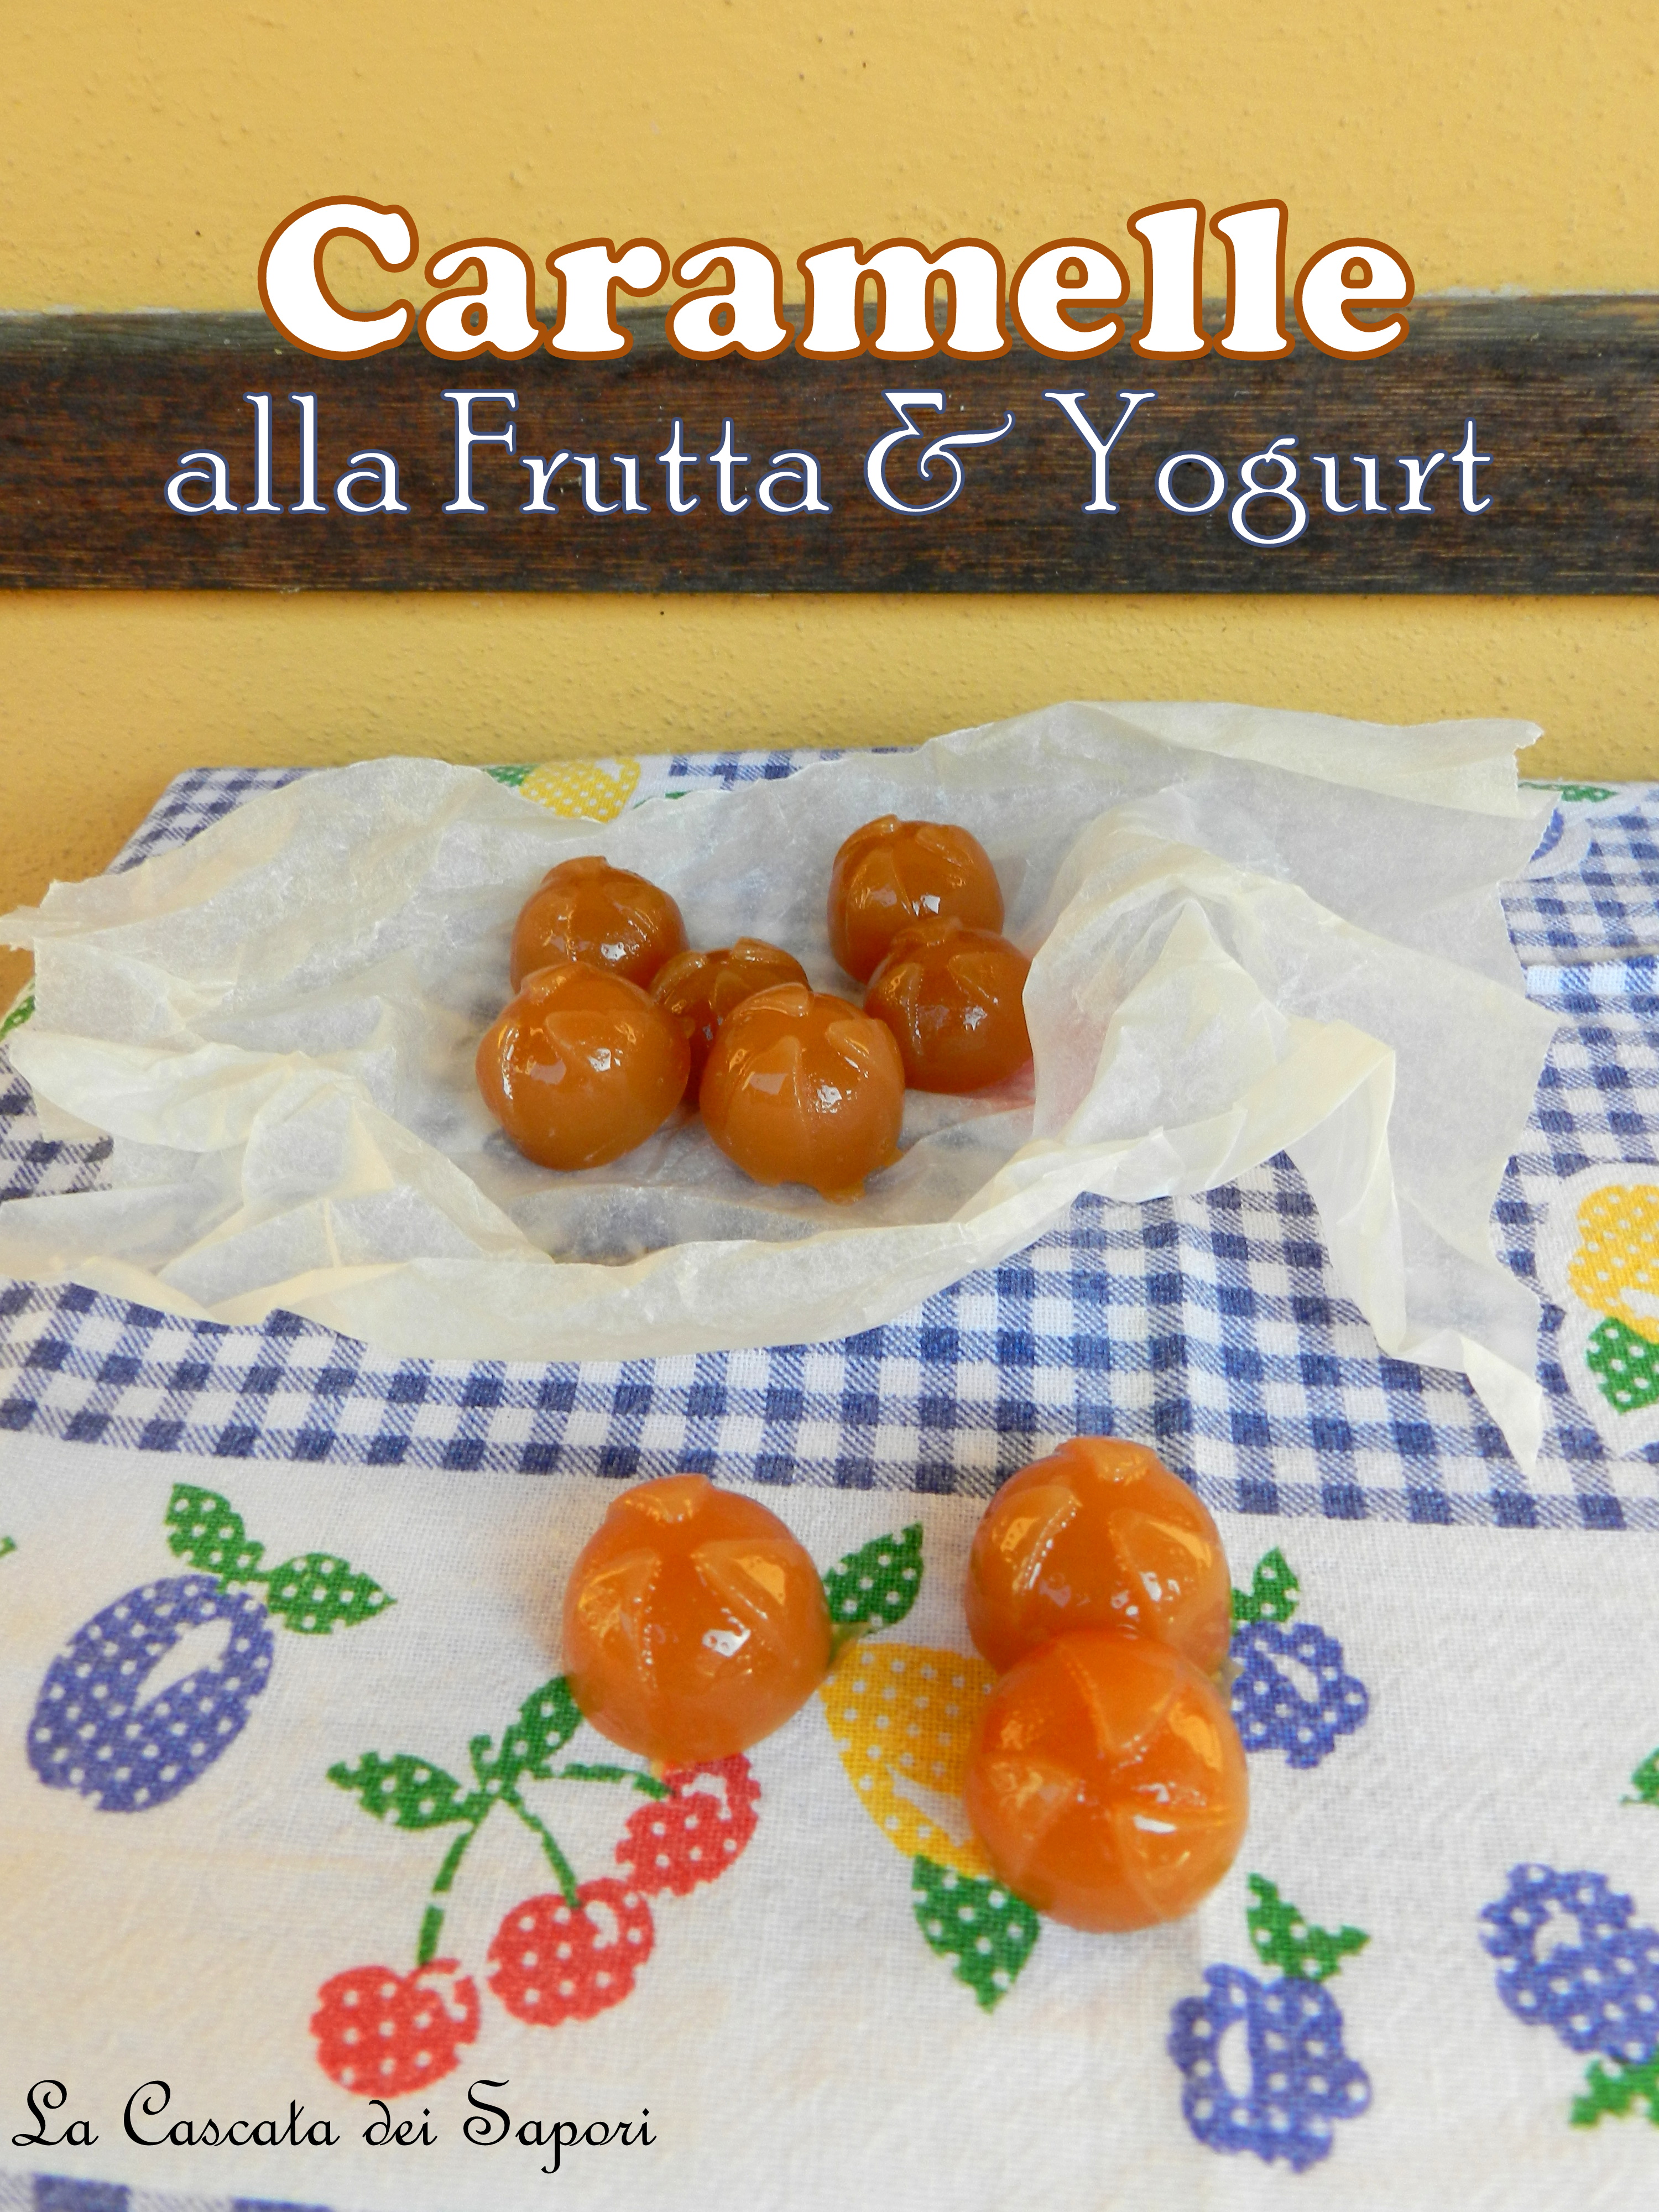 Caramelle-homemade-alla-Frutta-Yogurt